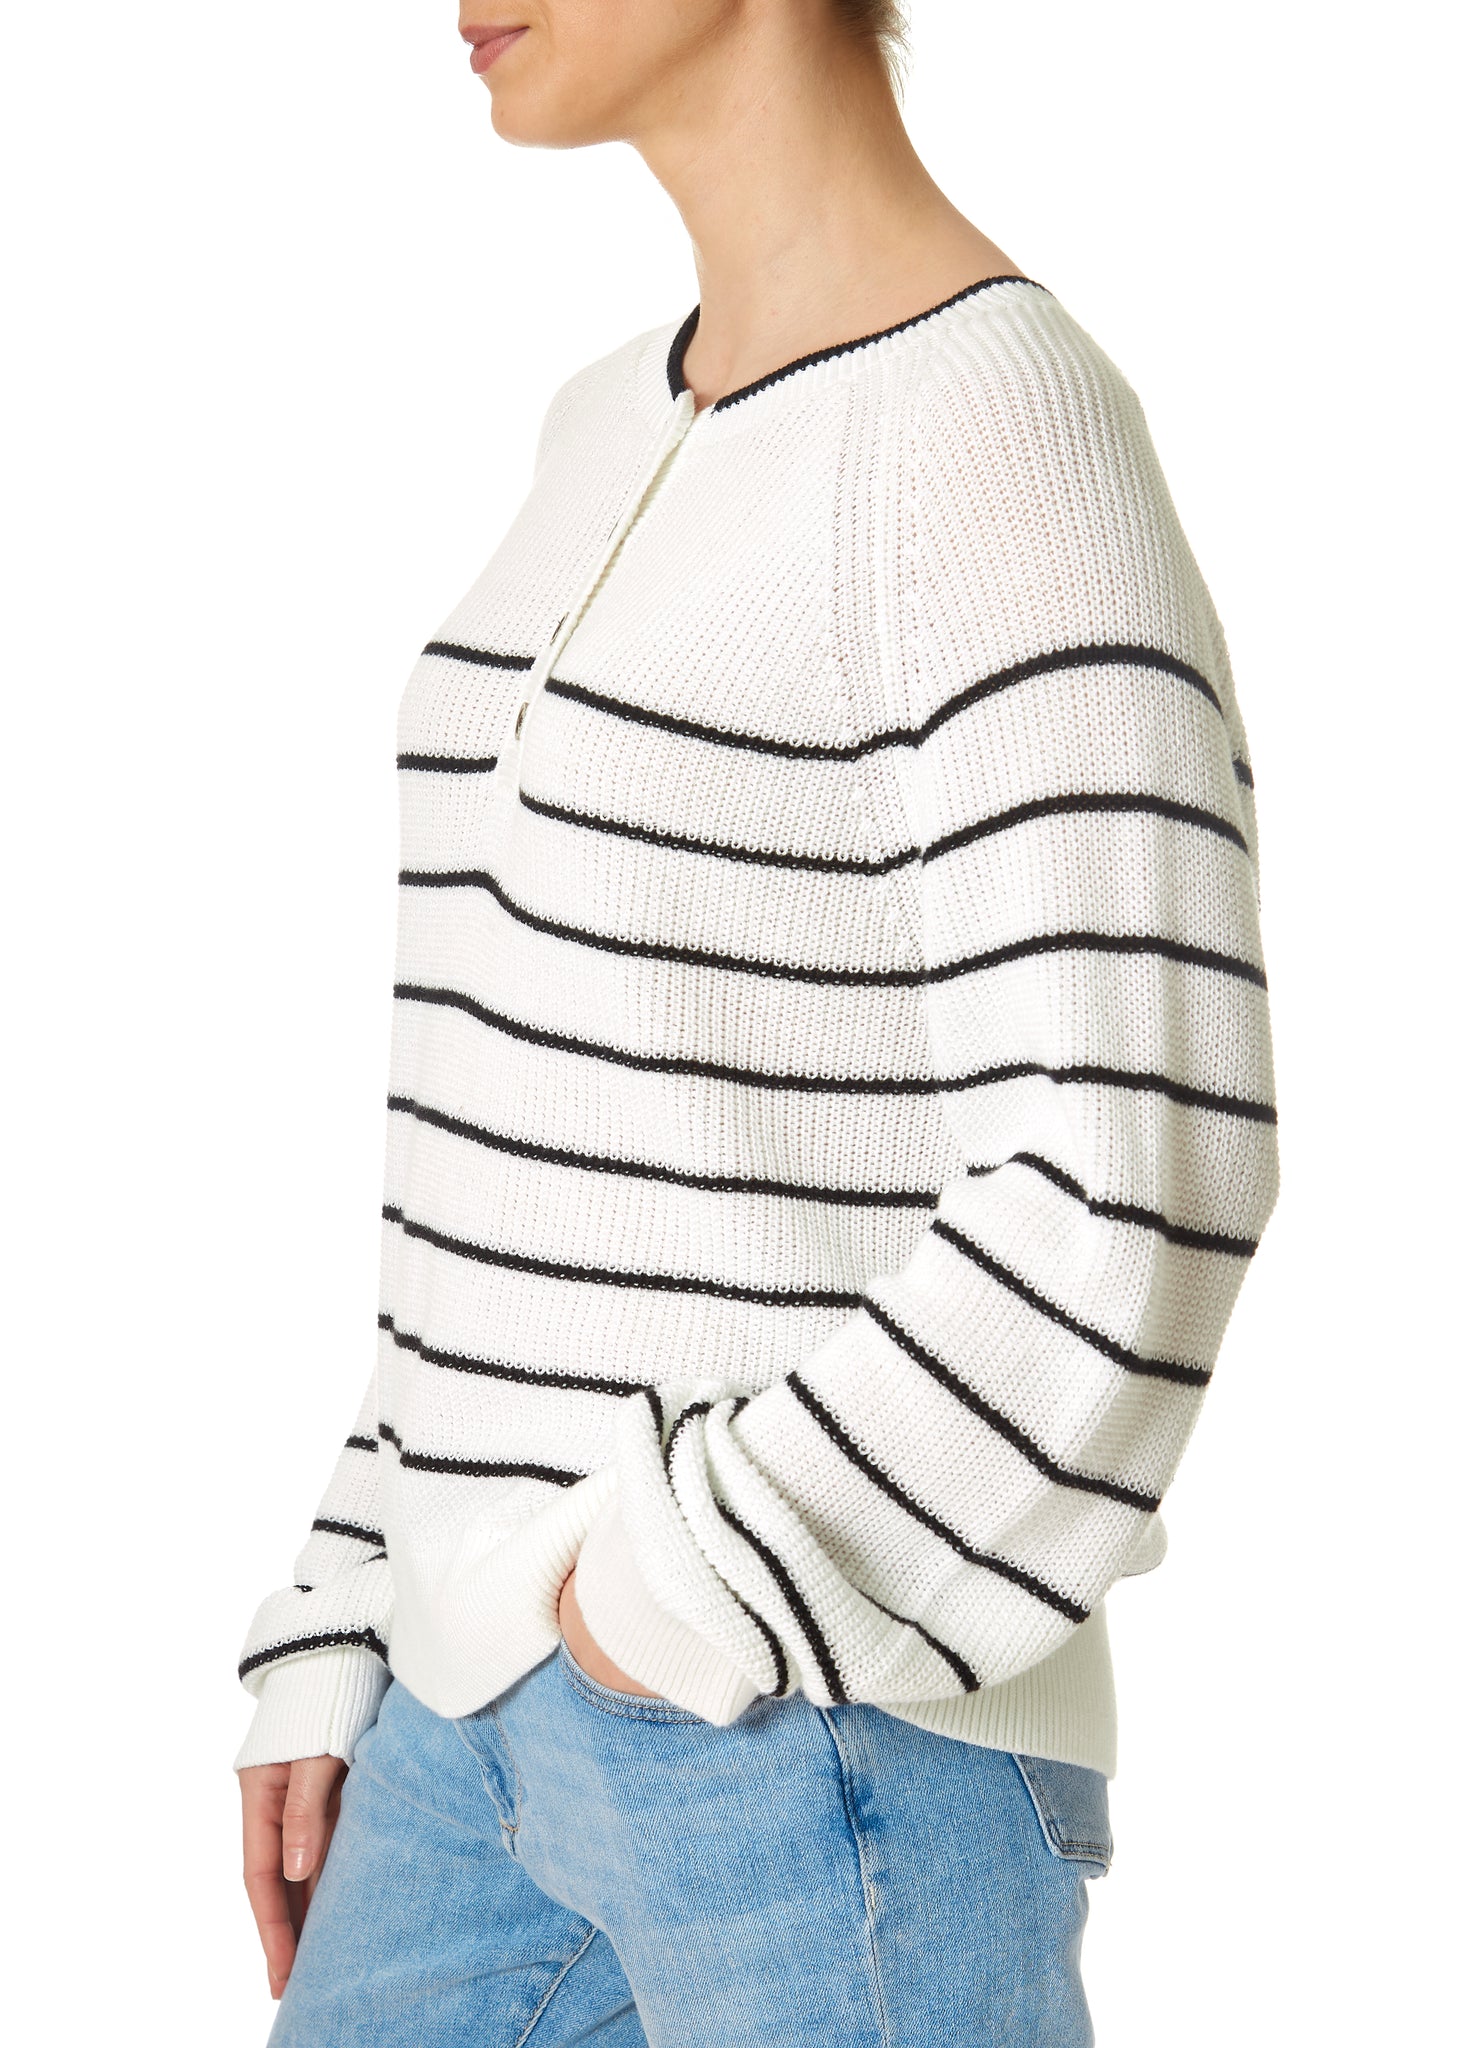 Kierra Milk Black Striped Sweater